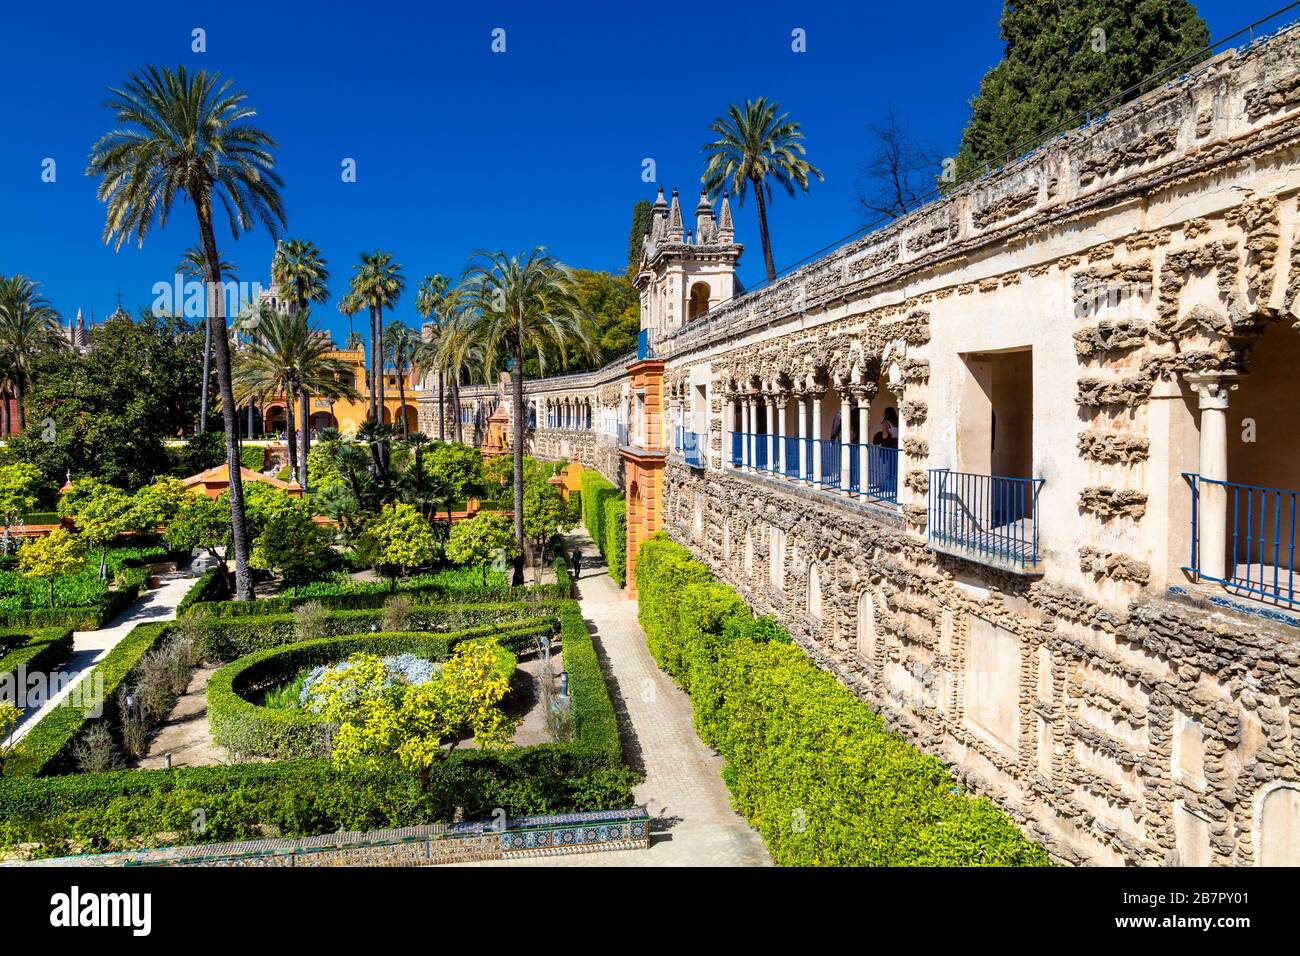 Exterior of Galería del Grutesco (Grotto Gallery) and gardens with palm trees, Royal Alcázar of Seville, Spain Stock Photo